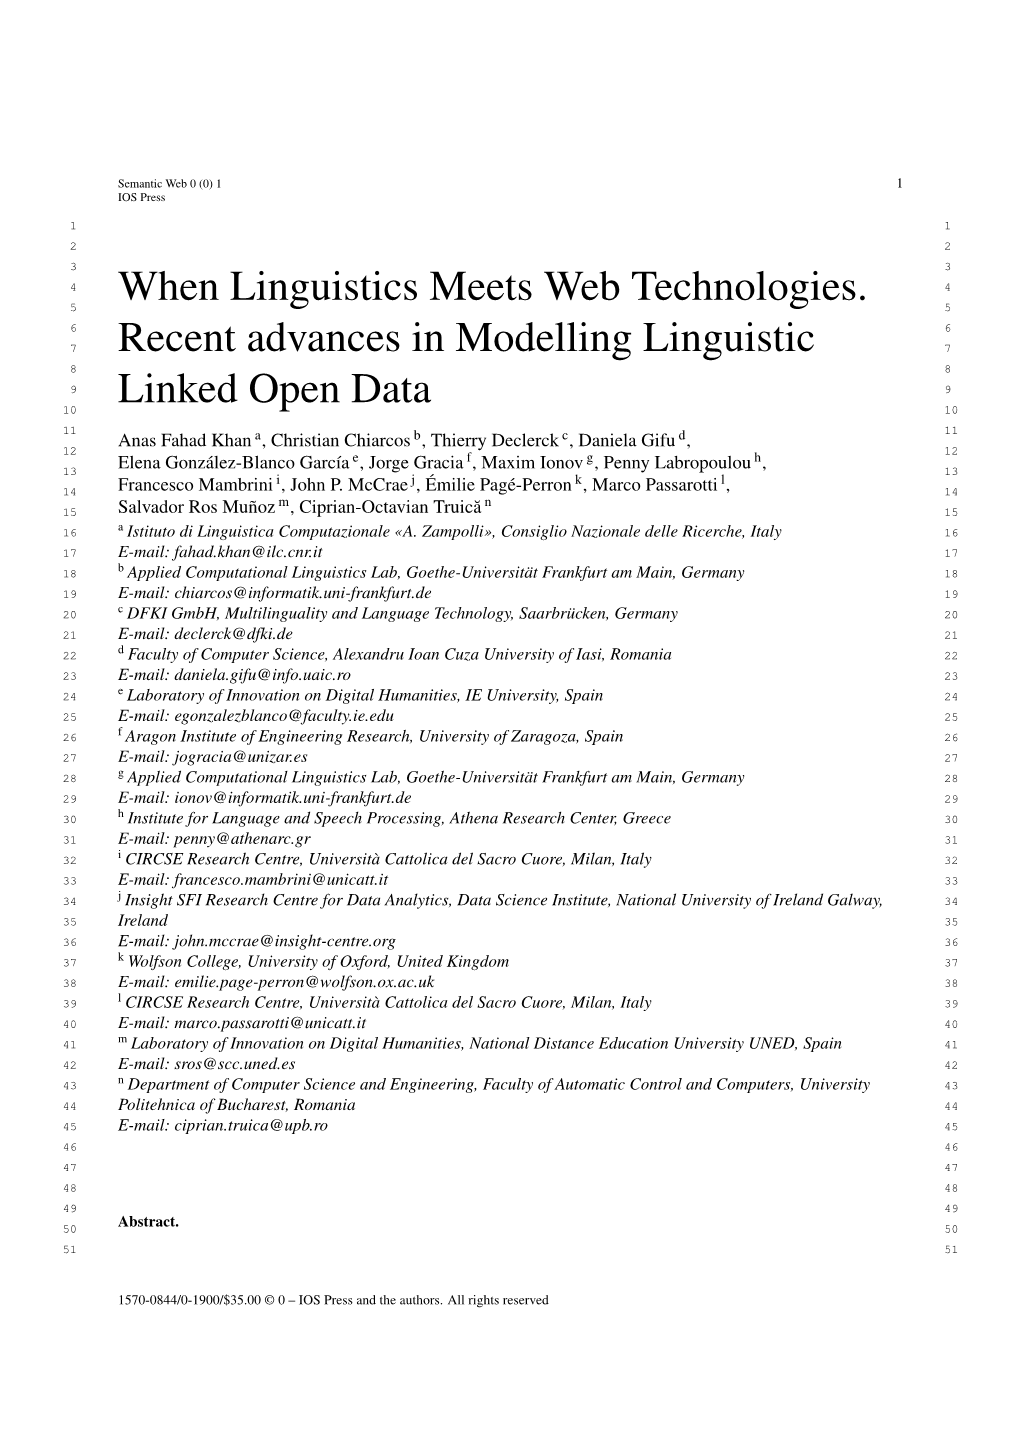 When Linguistics Meets Web Technologies. Recent Advances in Modelling Linguistic Linked Open Data